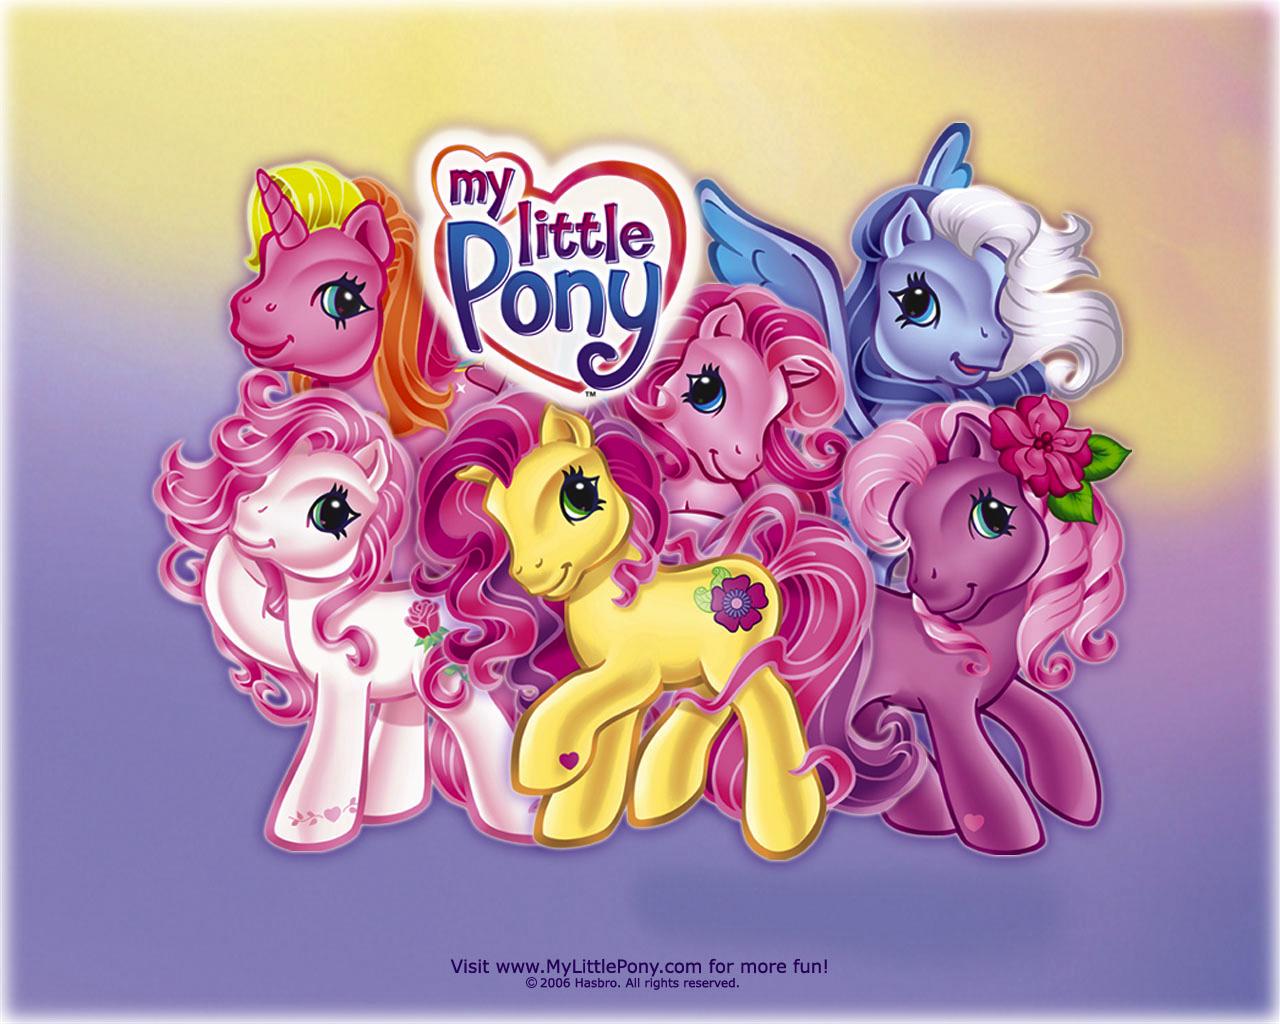 My Little Pony: Meet the Ponies (TV Series 2008– )